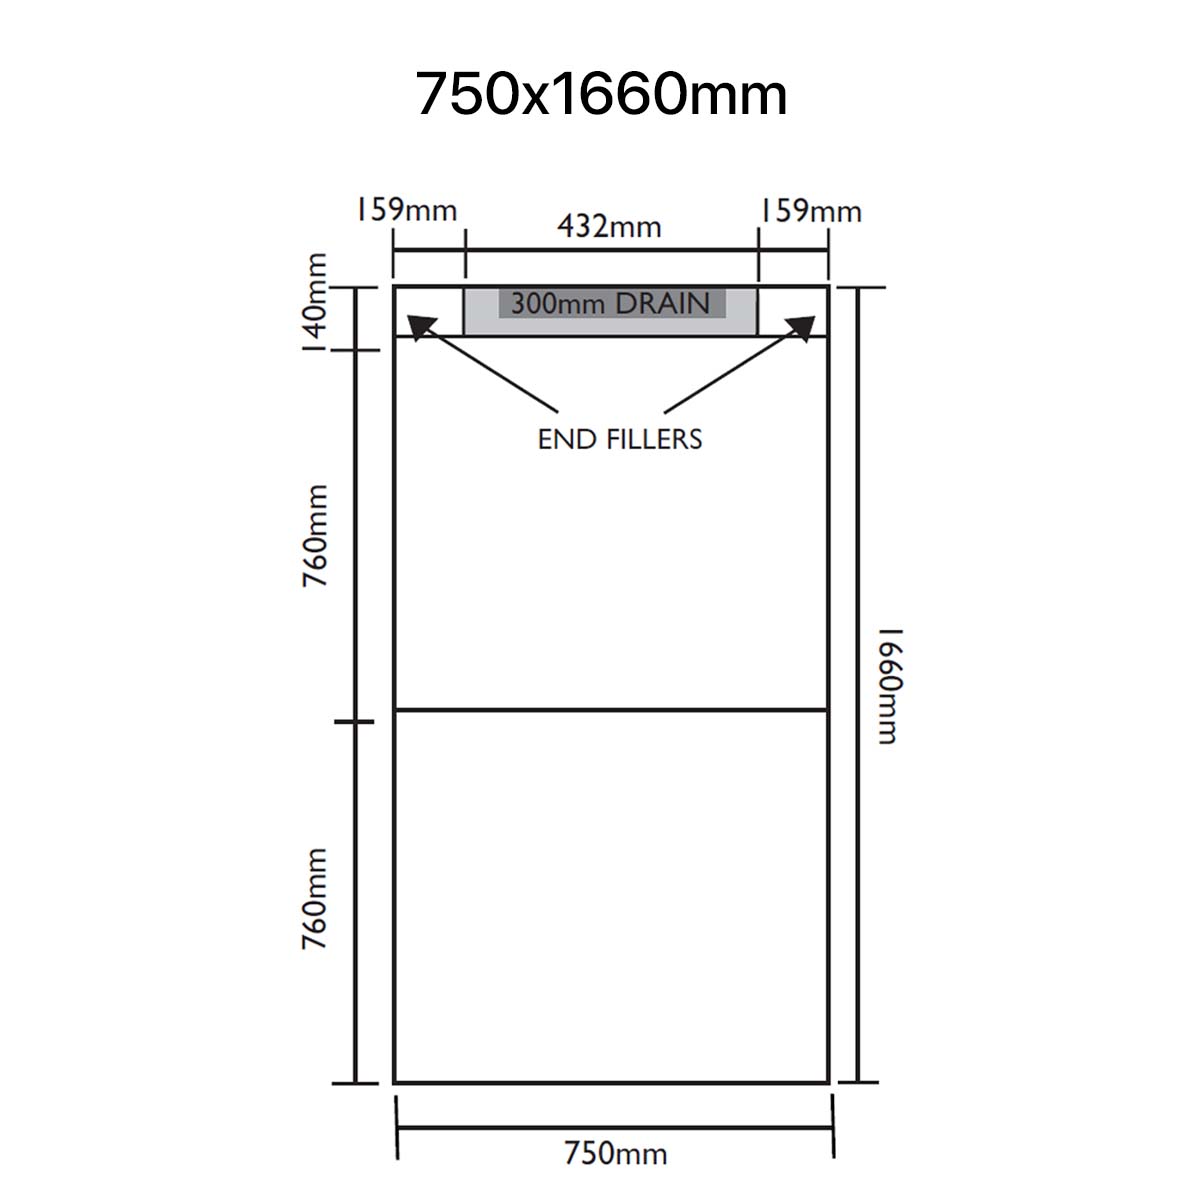 Unislope 1K linear drain 750x1660mm dimensions